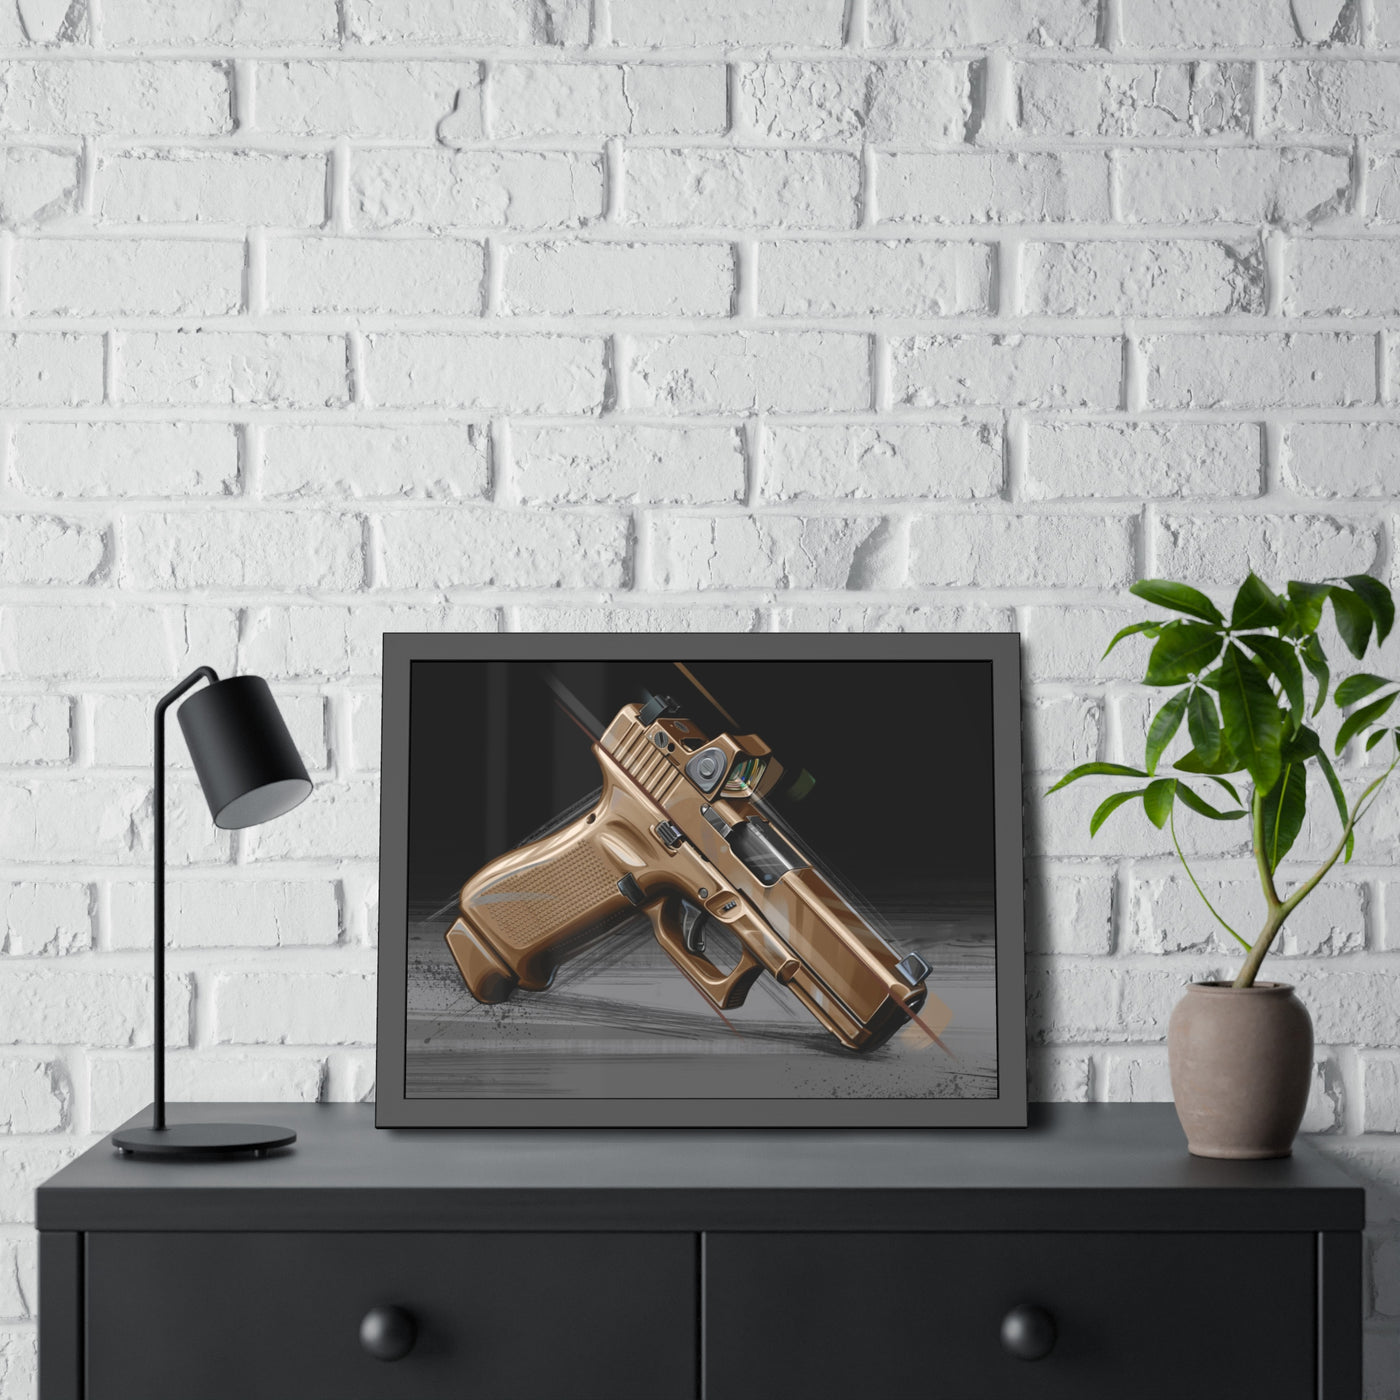 The Last Resort - OG Tan Poly Pistol Painting - Black Frame - Value Collection